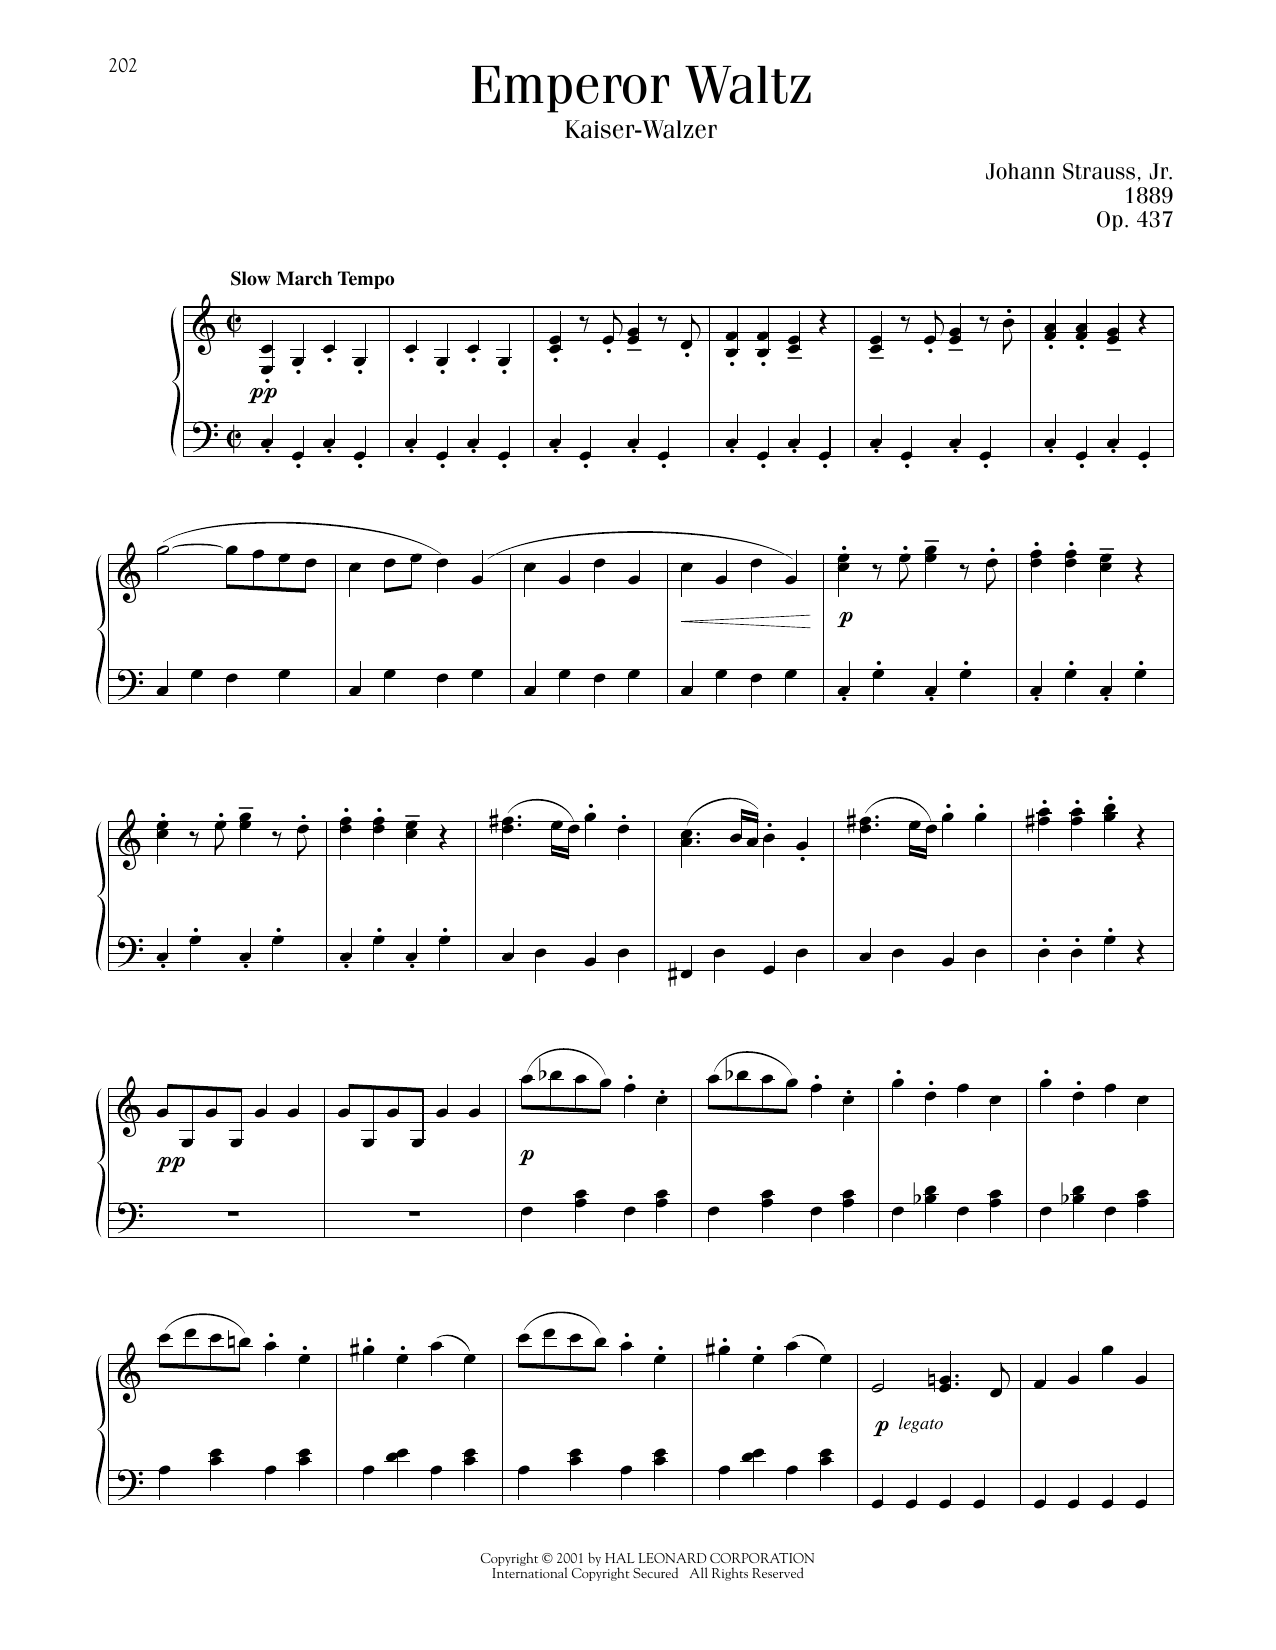 Johann Strauss Emperor Waltz, Op. 437 sheet music notes printable PDF score